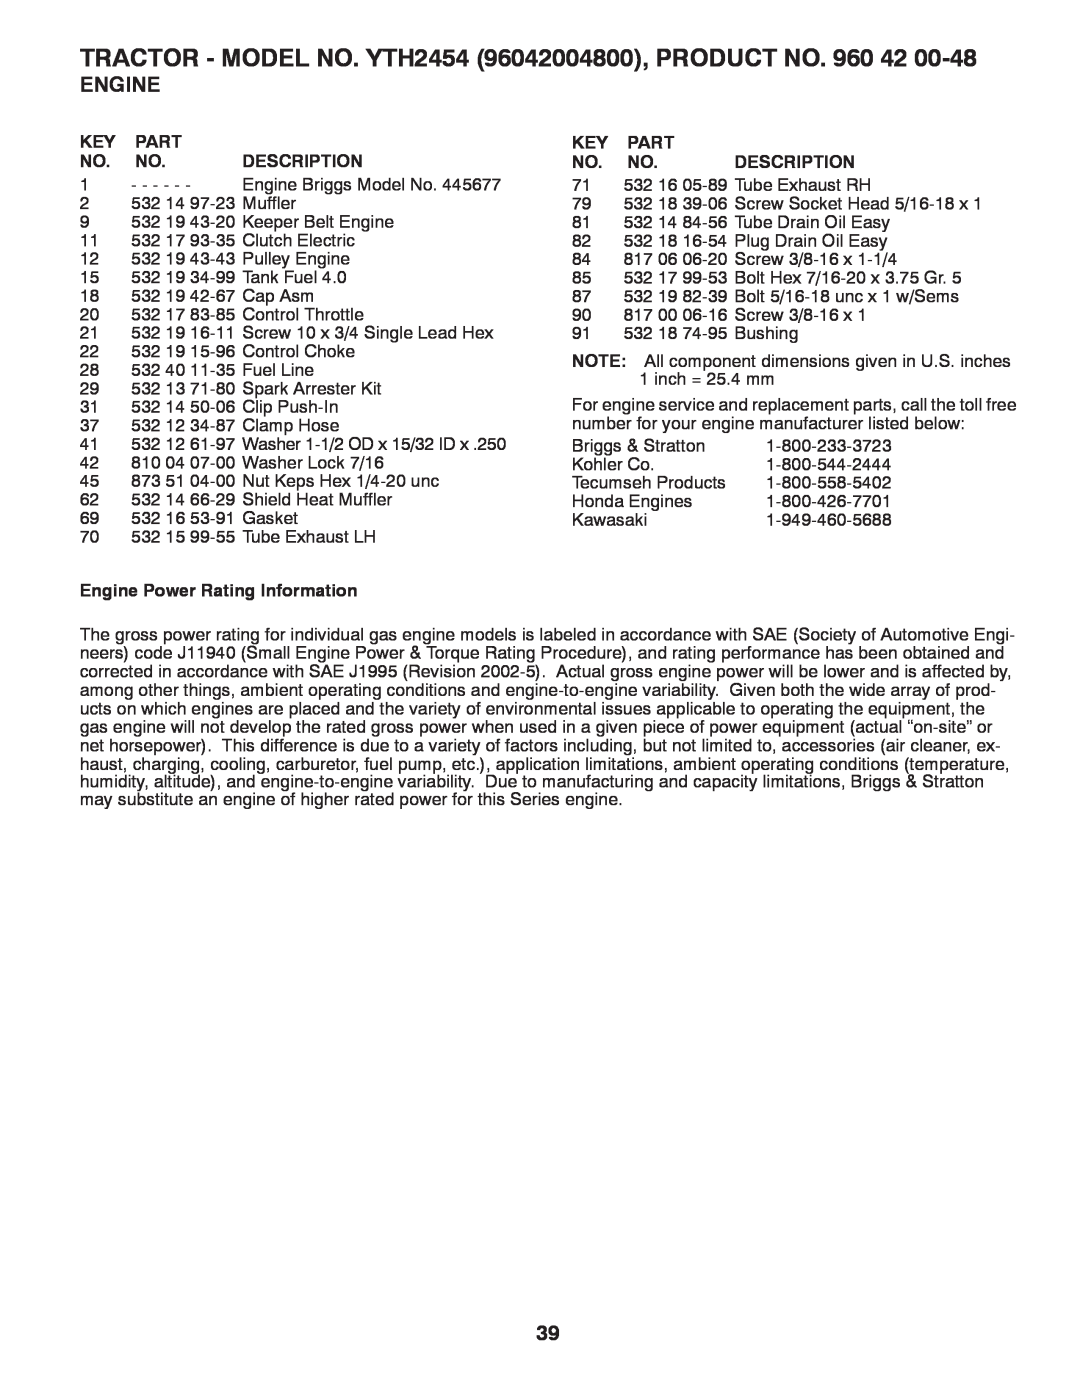 Husqvarna YTH2454 owner manual Key Part No. No. Description, Engine Power Rating Information 